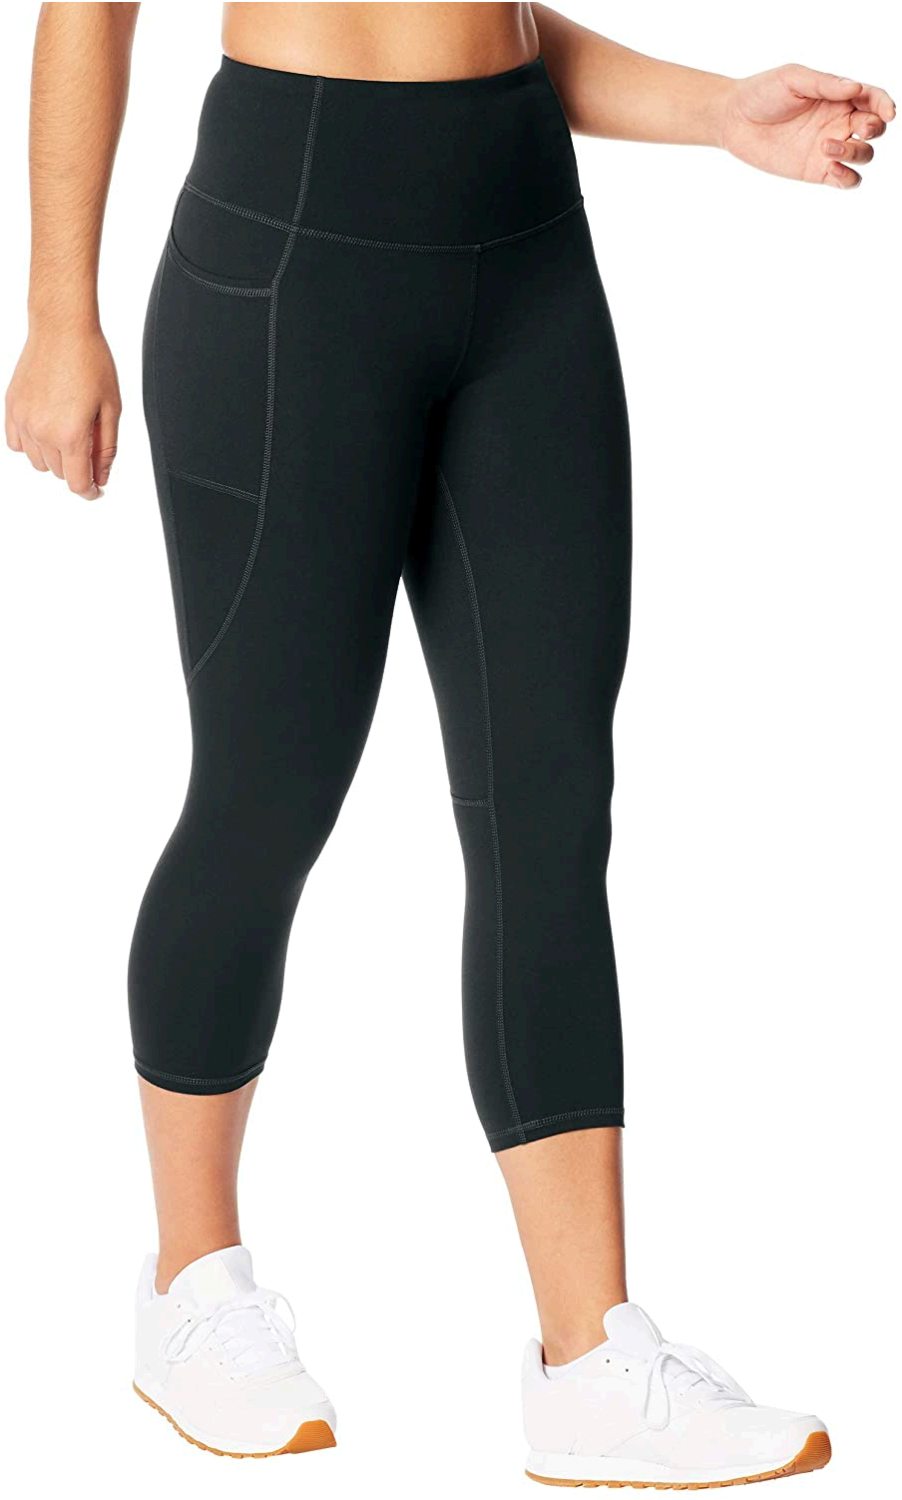 c9 Champion Target High Waisted Freedom Lace Up Lattice Capri Leggings XS  Black | Clothes design, Fashion tips, Fashion